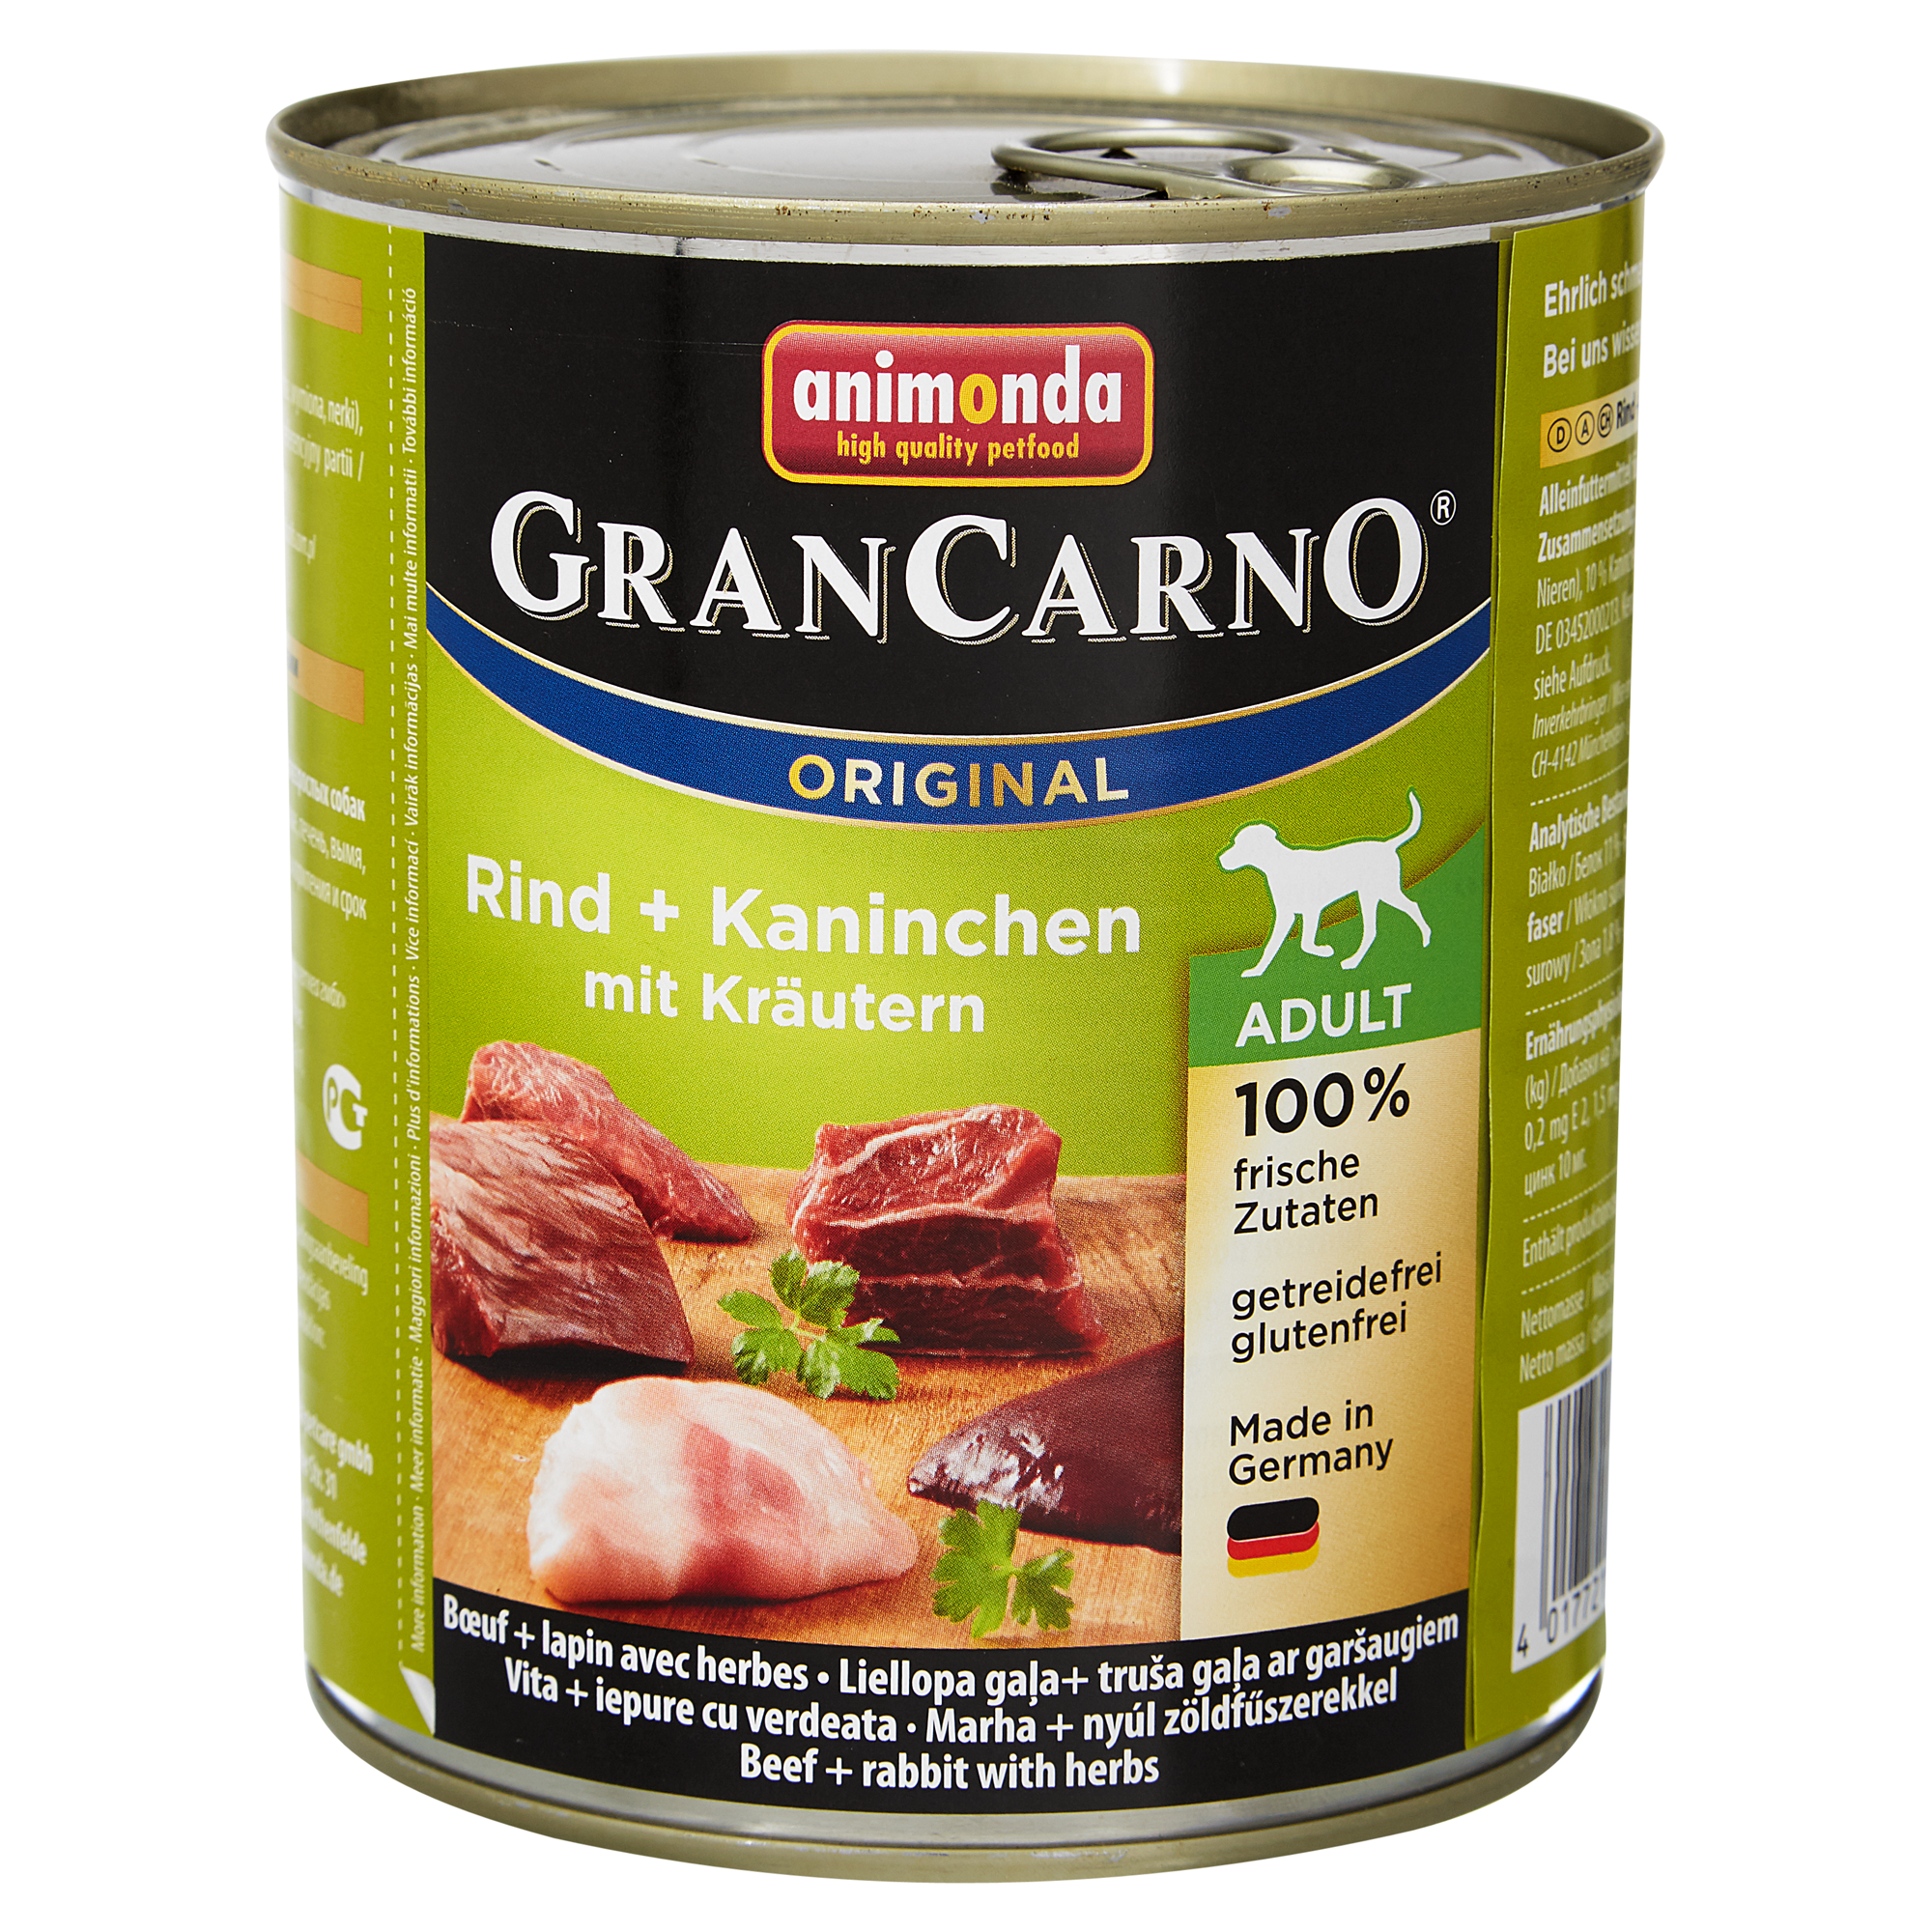 Hundenassfutter "Gran Carno" Original mit Rind/Kaninchen/Kräuter 800 g + product picture